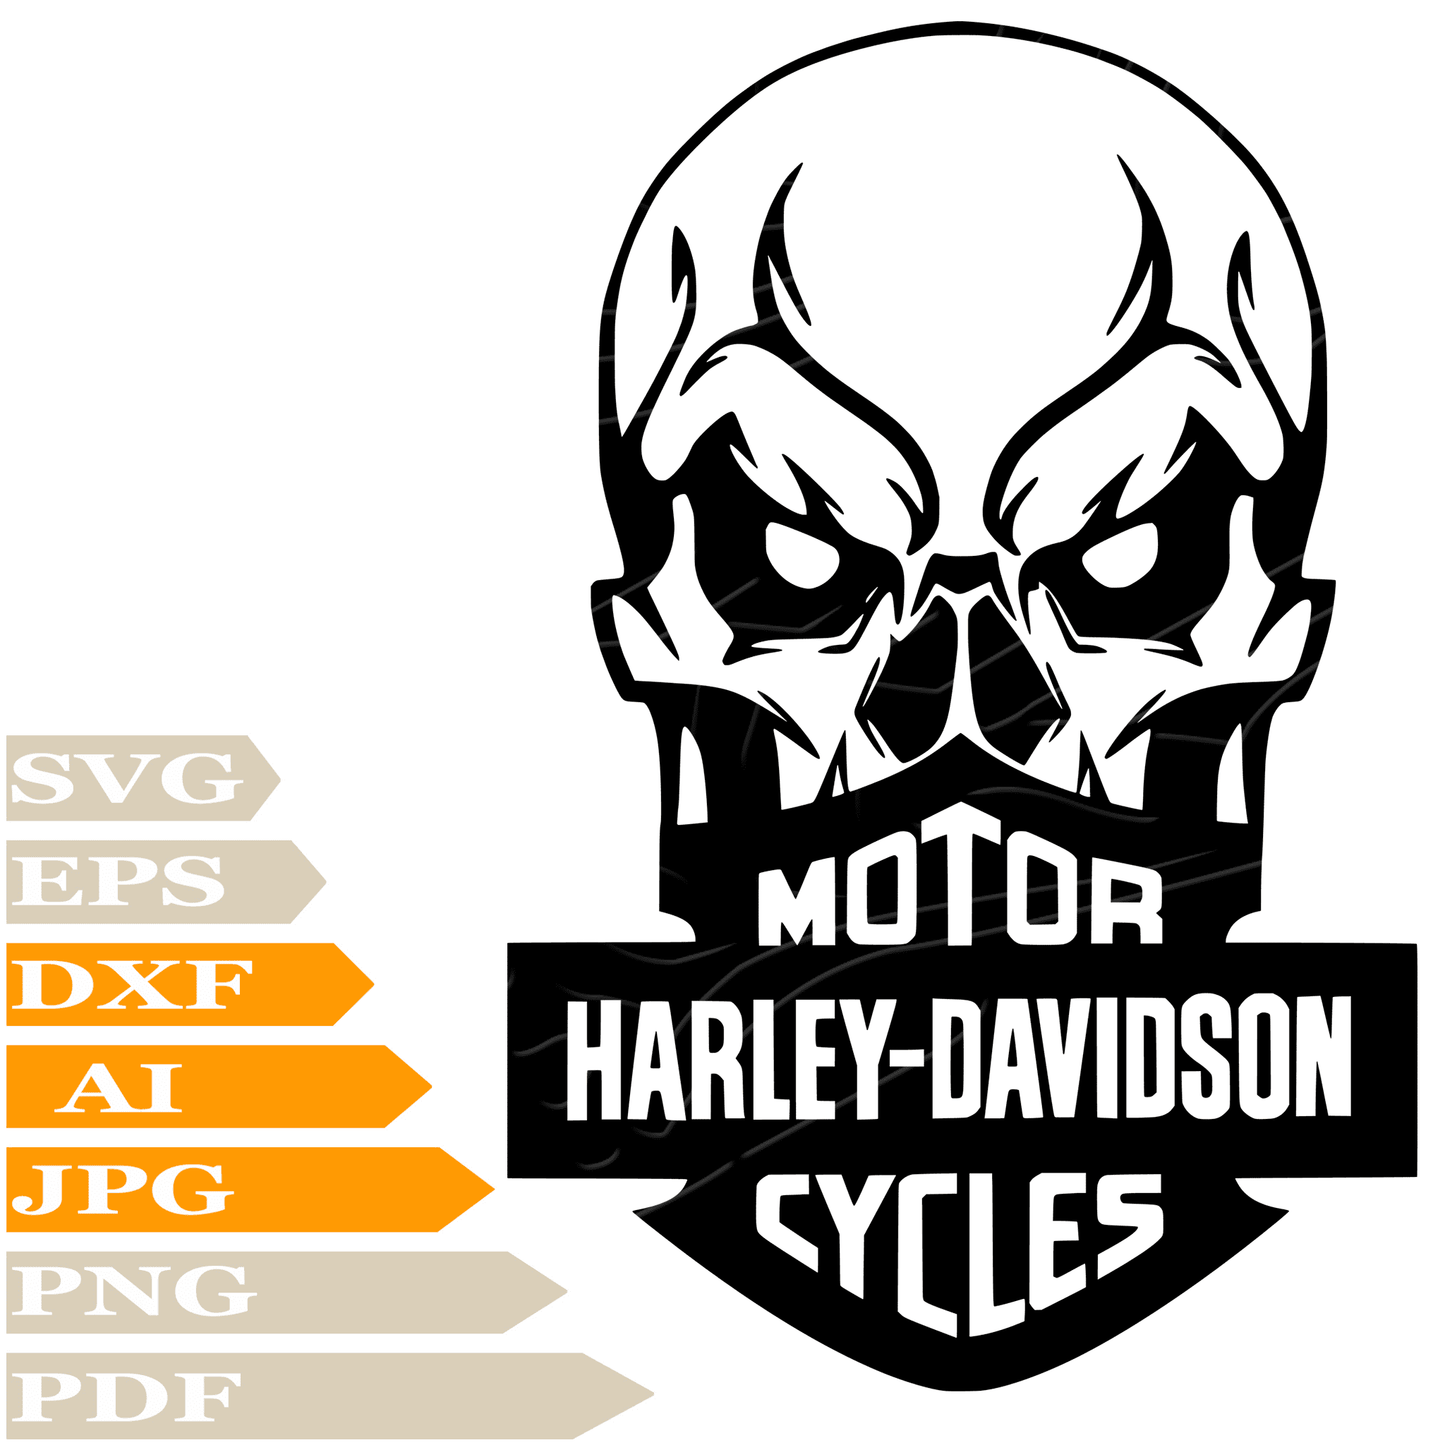 Harley Davidson SVG File, Skull Harley Davidson Logo SVG Design, Harley Davidson Logo SVG Cricut, Harley Logo Digital Vector, PNG, Image Cut, Clipart, Cut File, Print, Decal, Shirt, Silhouette